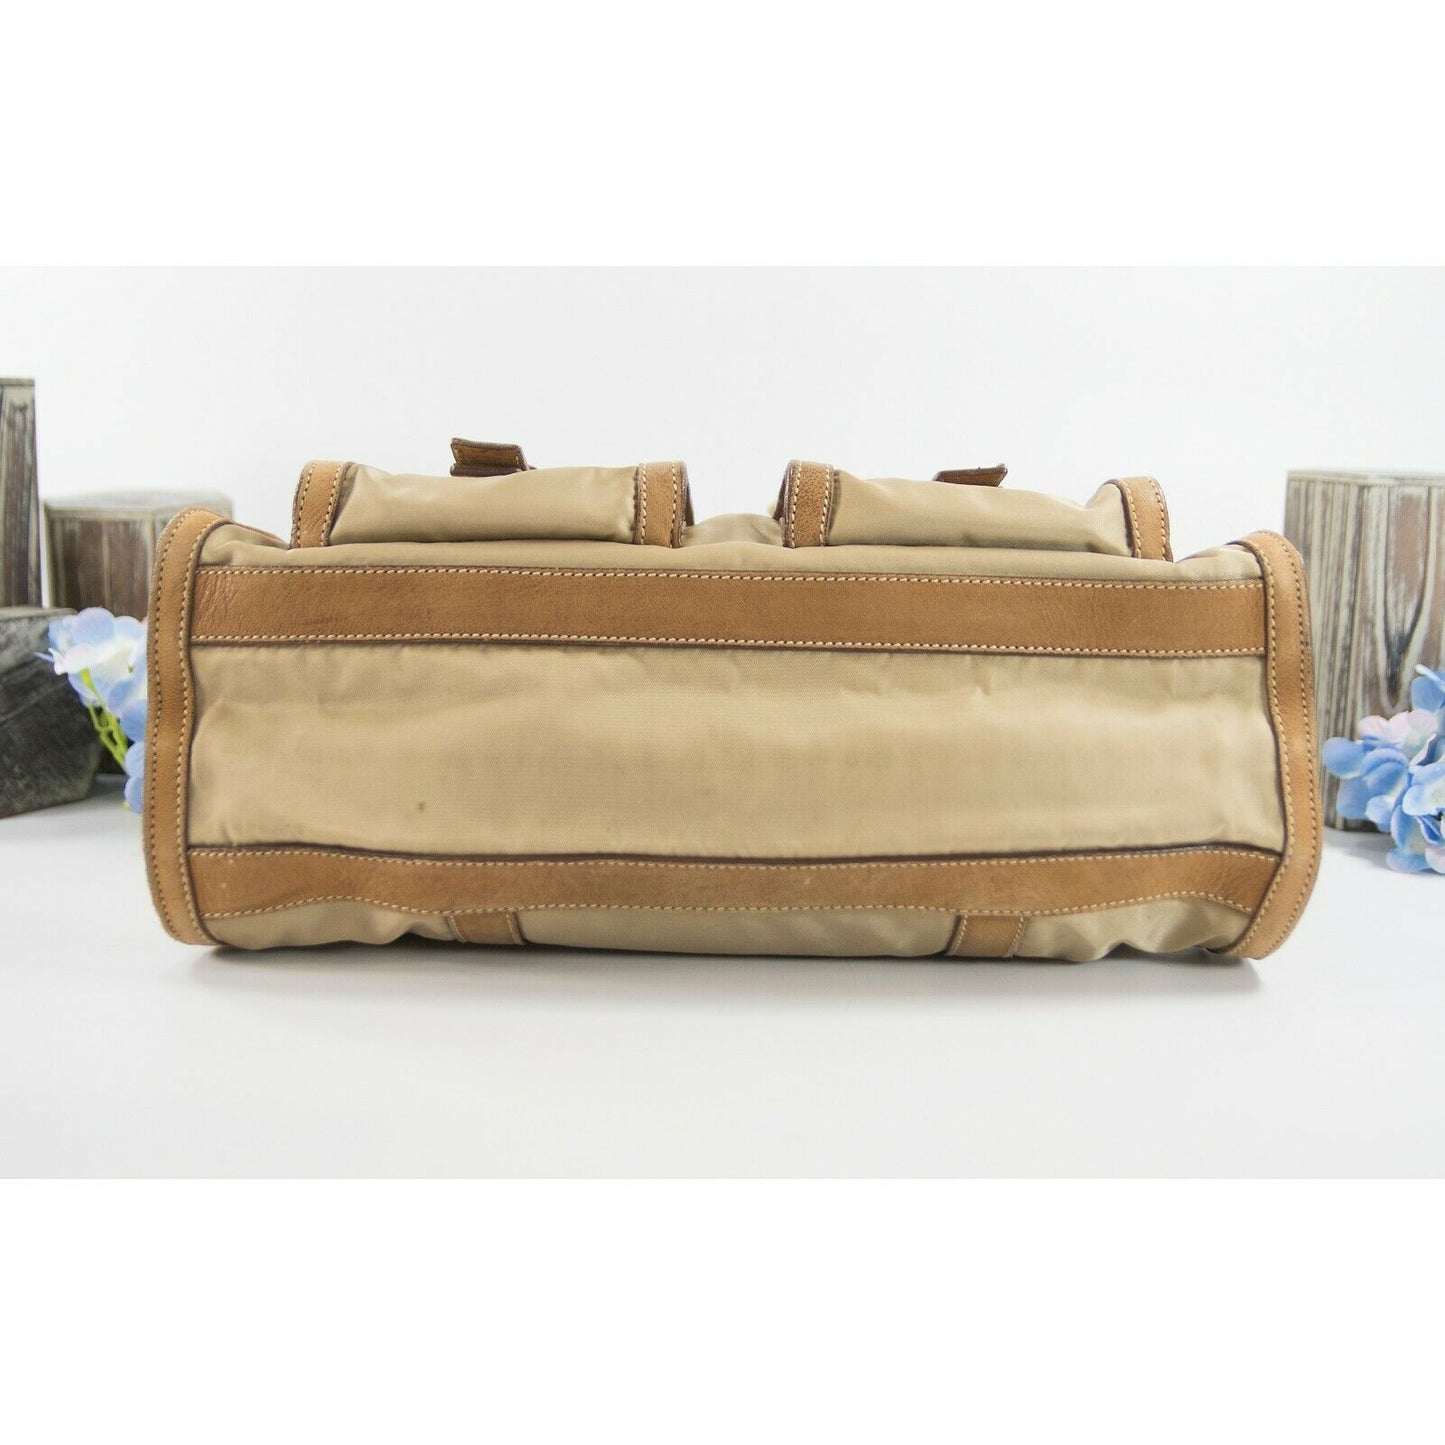 Prada Beige Nude Nylon Leather Large Briefcase Satchel Bag GUC